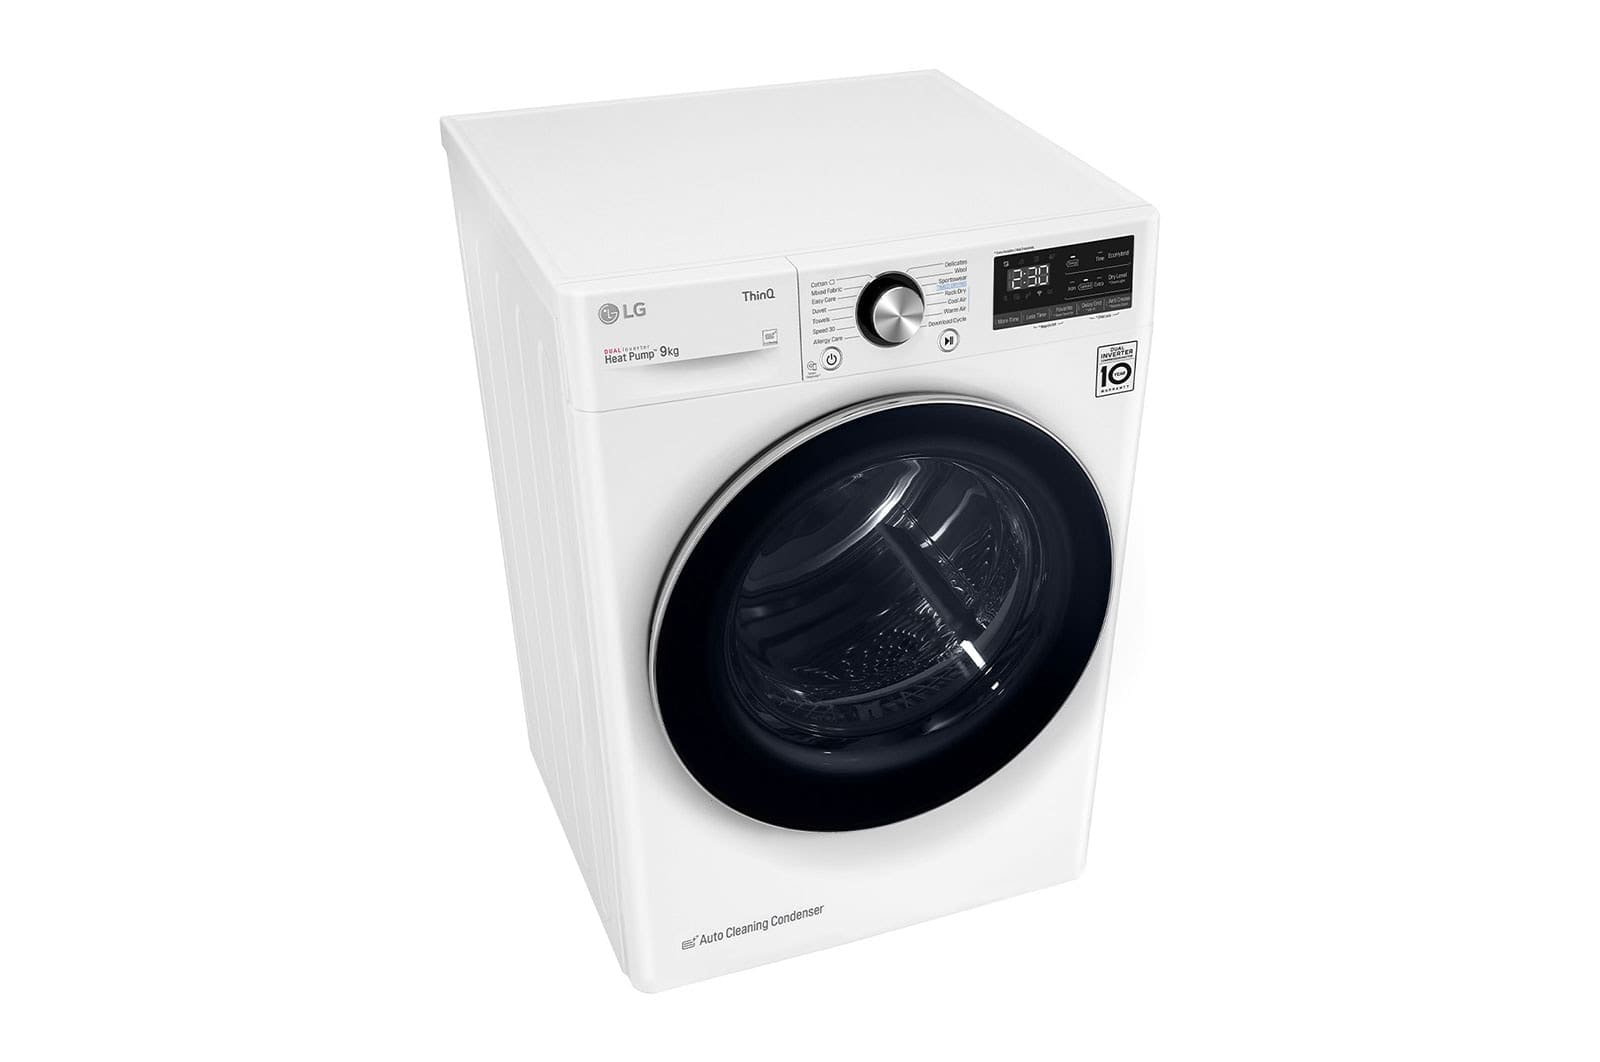 LG-Dryer-9kg-3.jpg